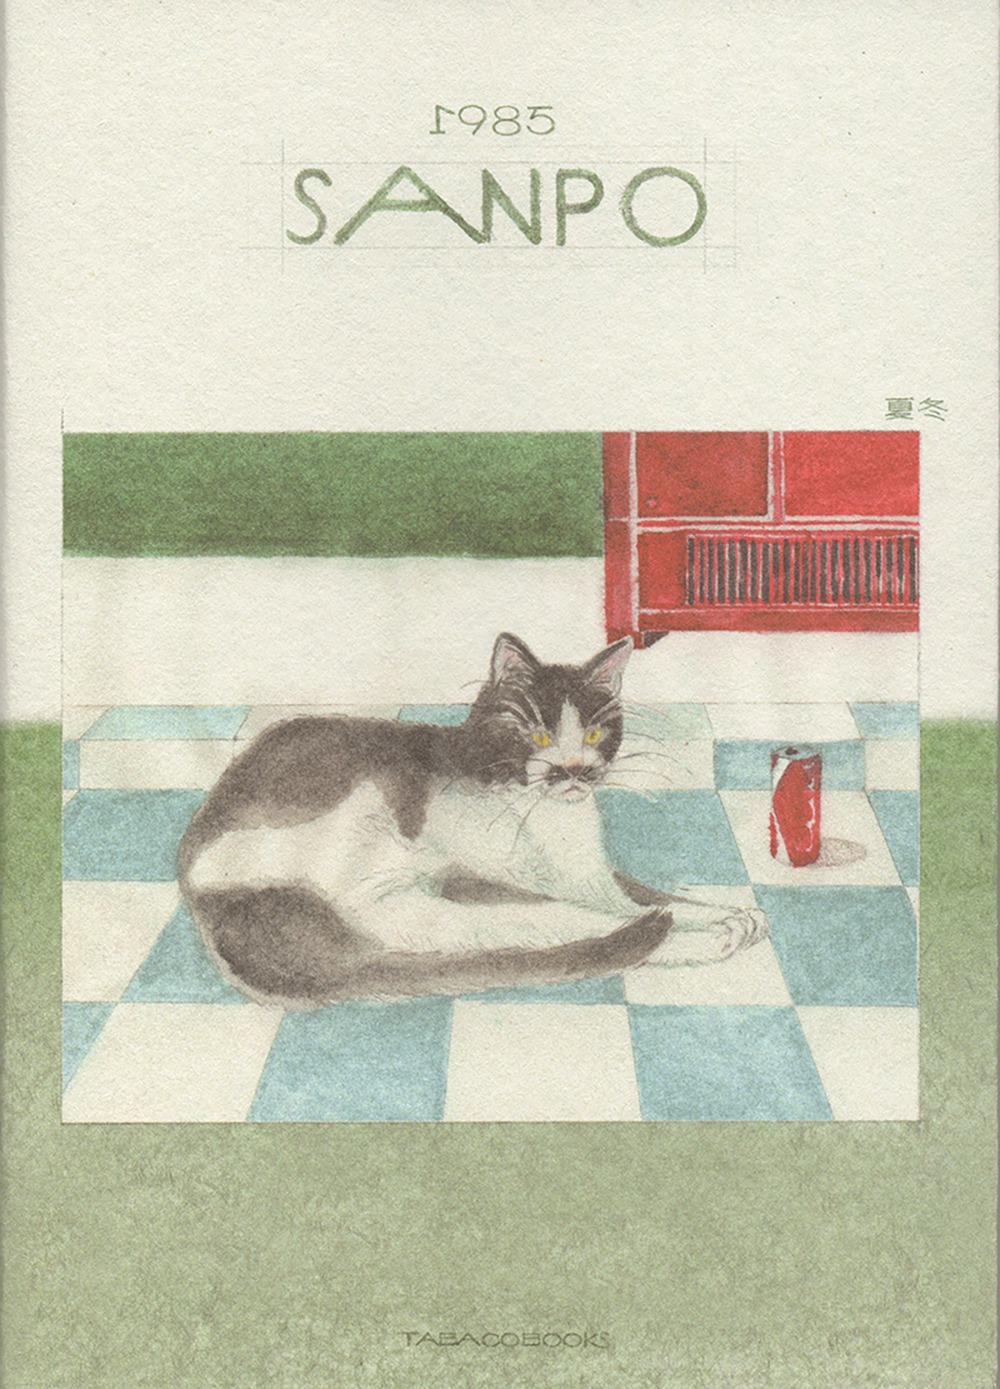 1985 sanpo · 타바코북스